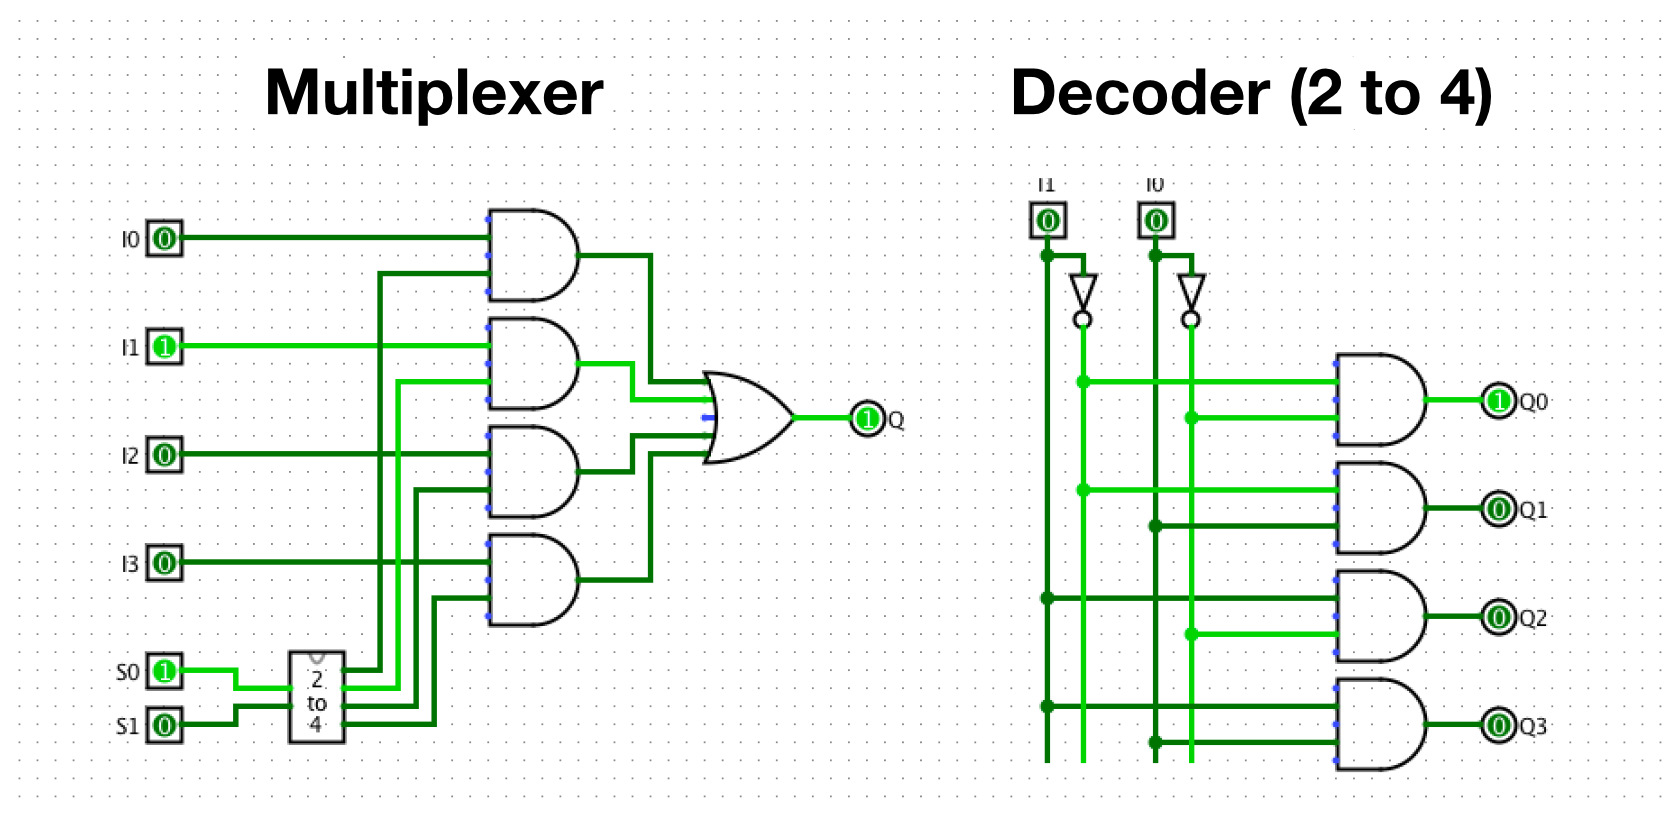 Multiplexer and Decoder Circuit Diagram